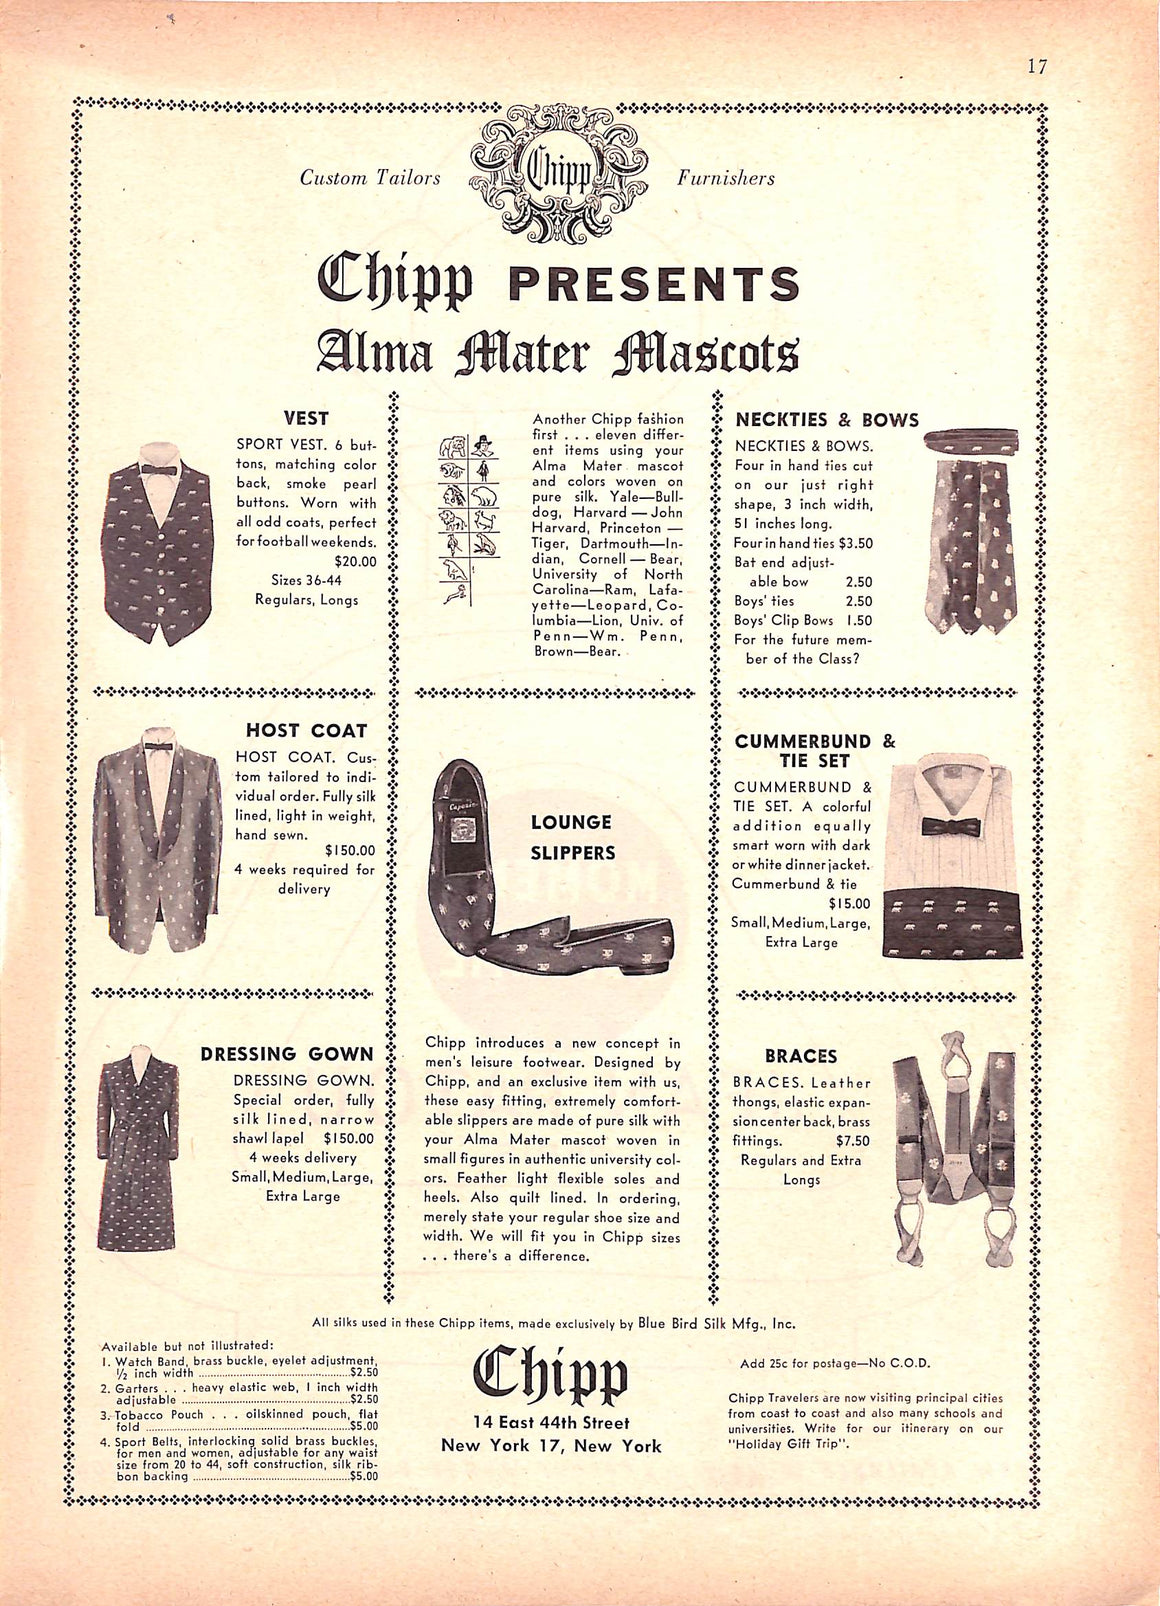 "Chipp Presents Alma Mater Mascots c1953 Advert Page"